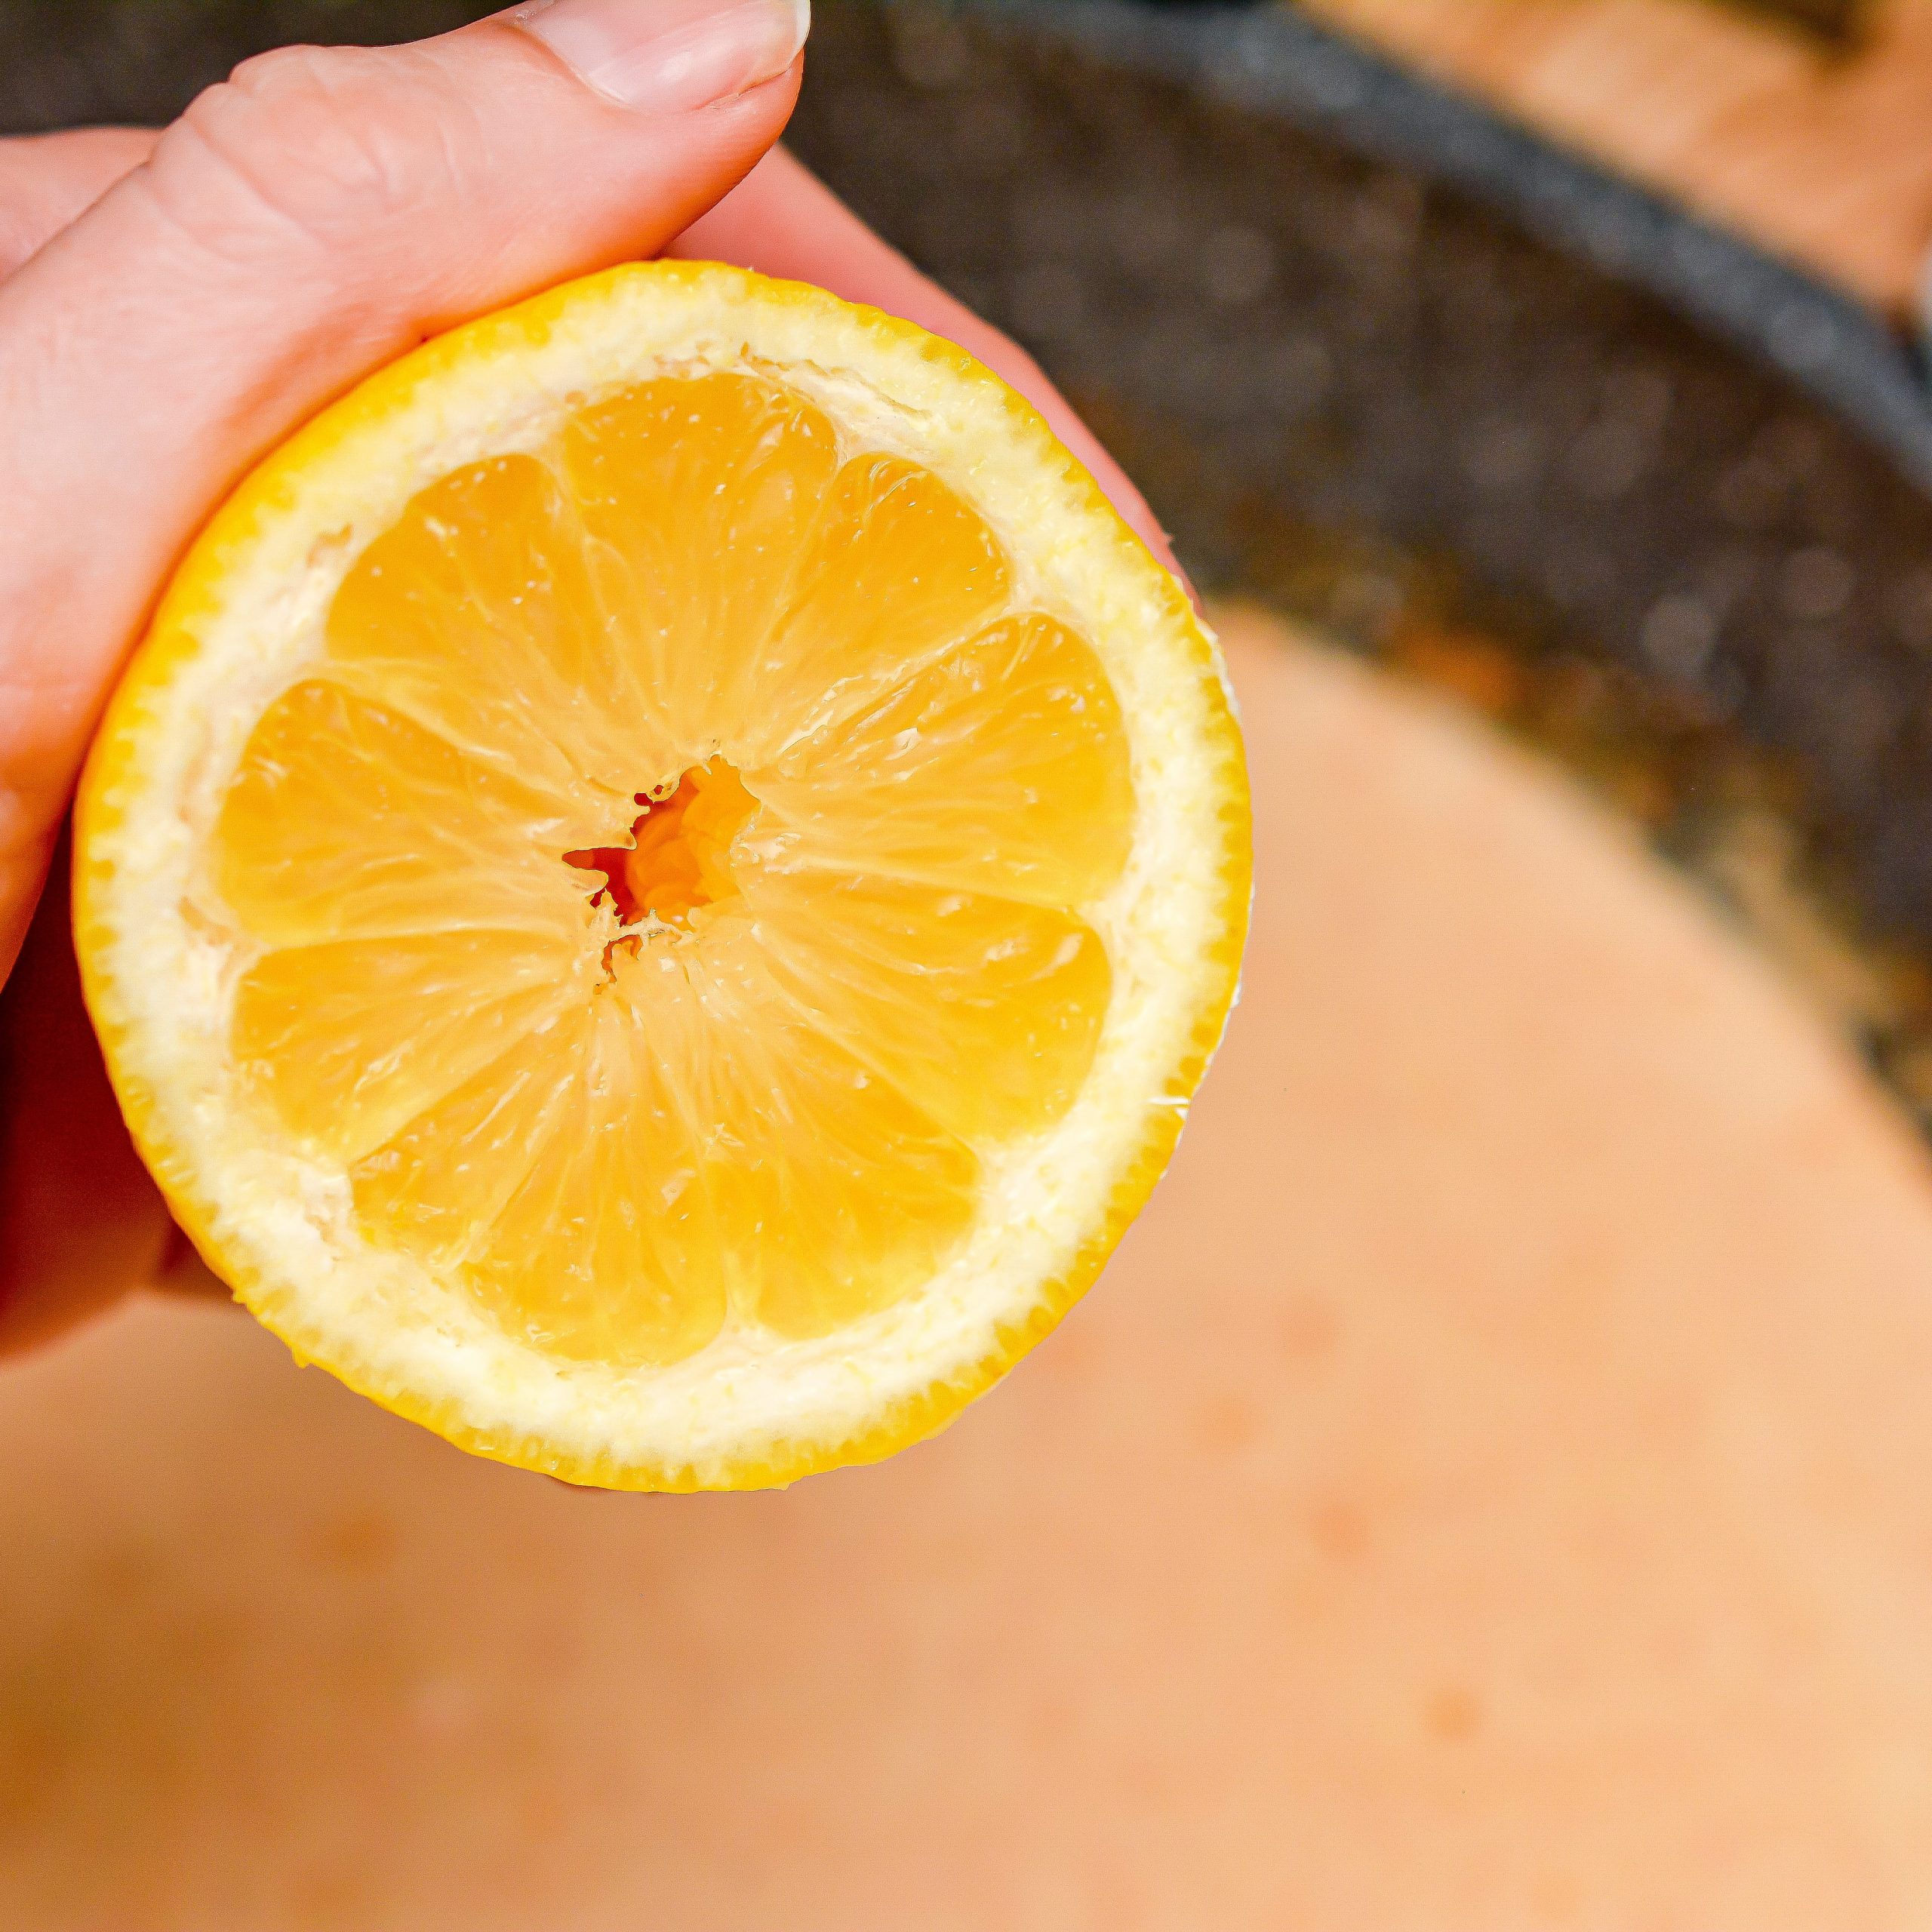 Squeeze the fresh lemon.